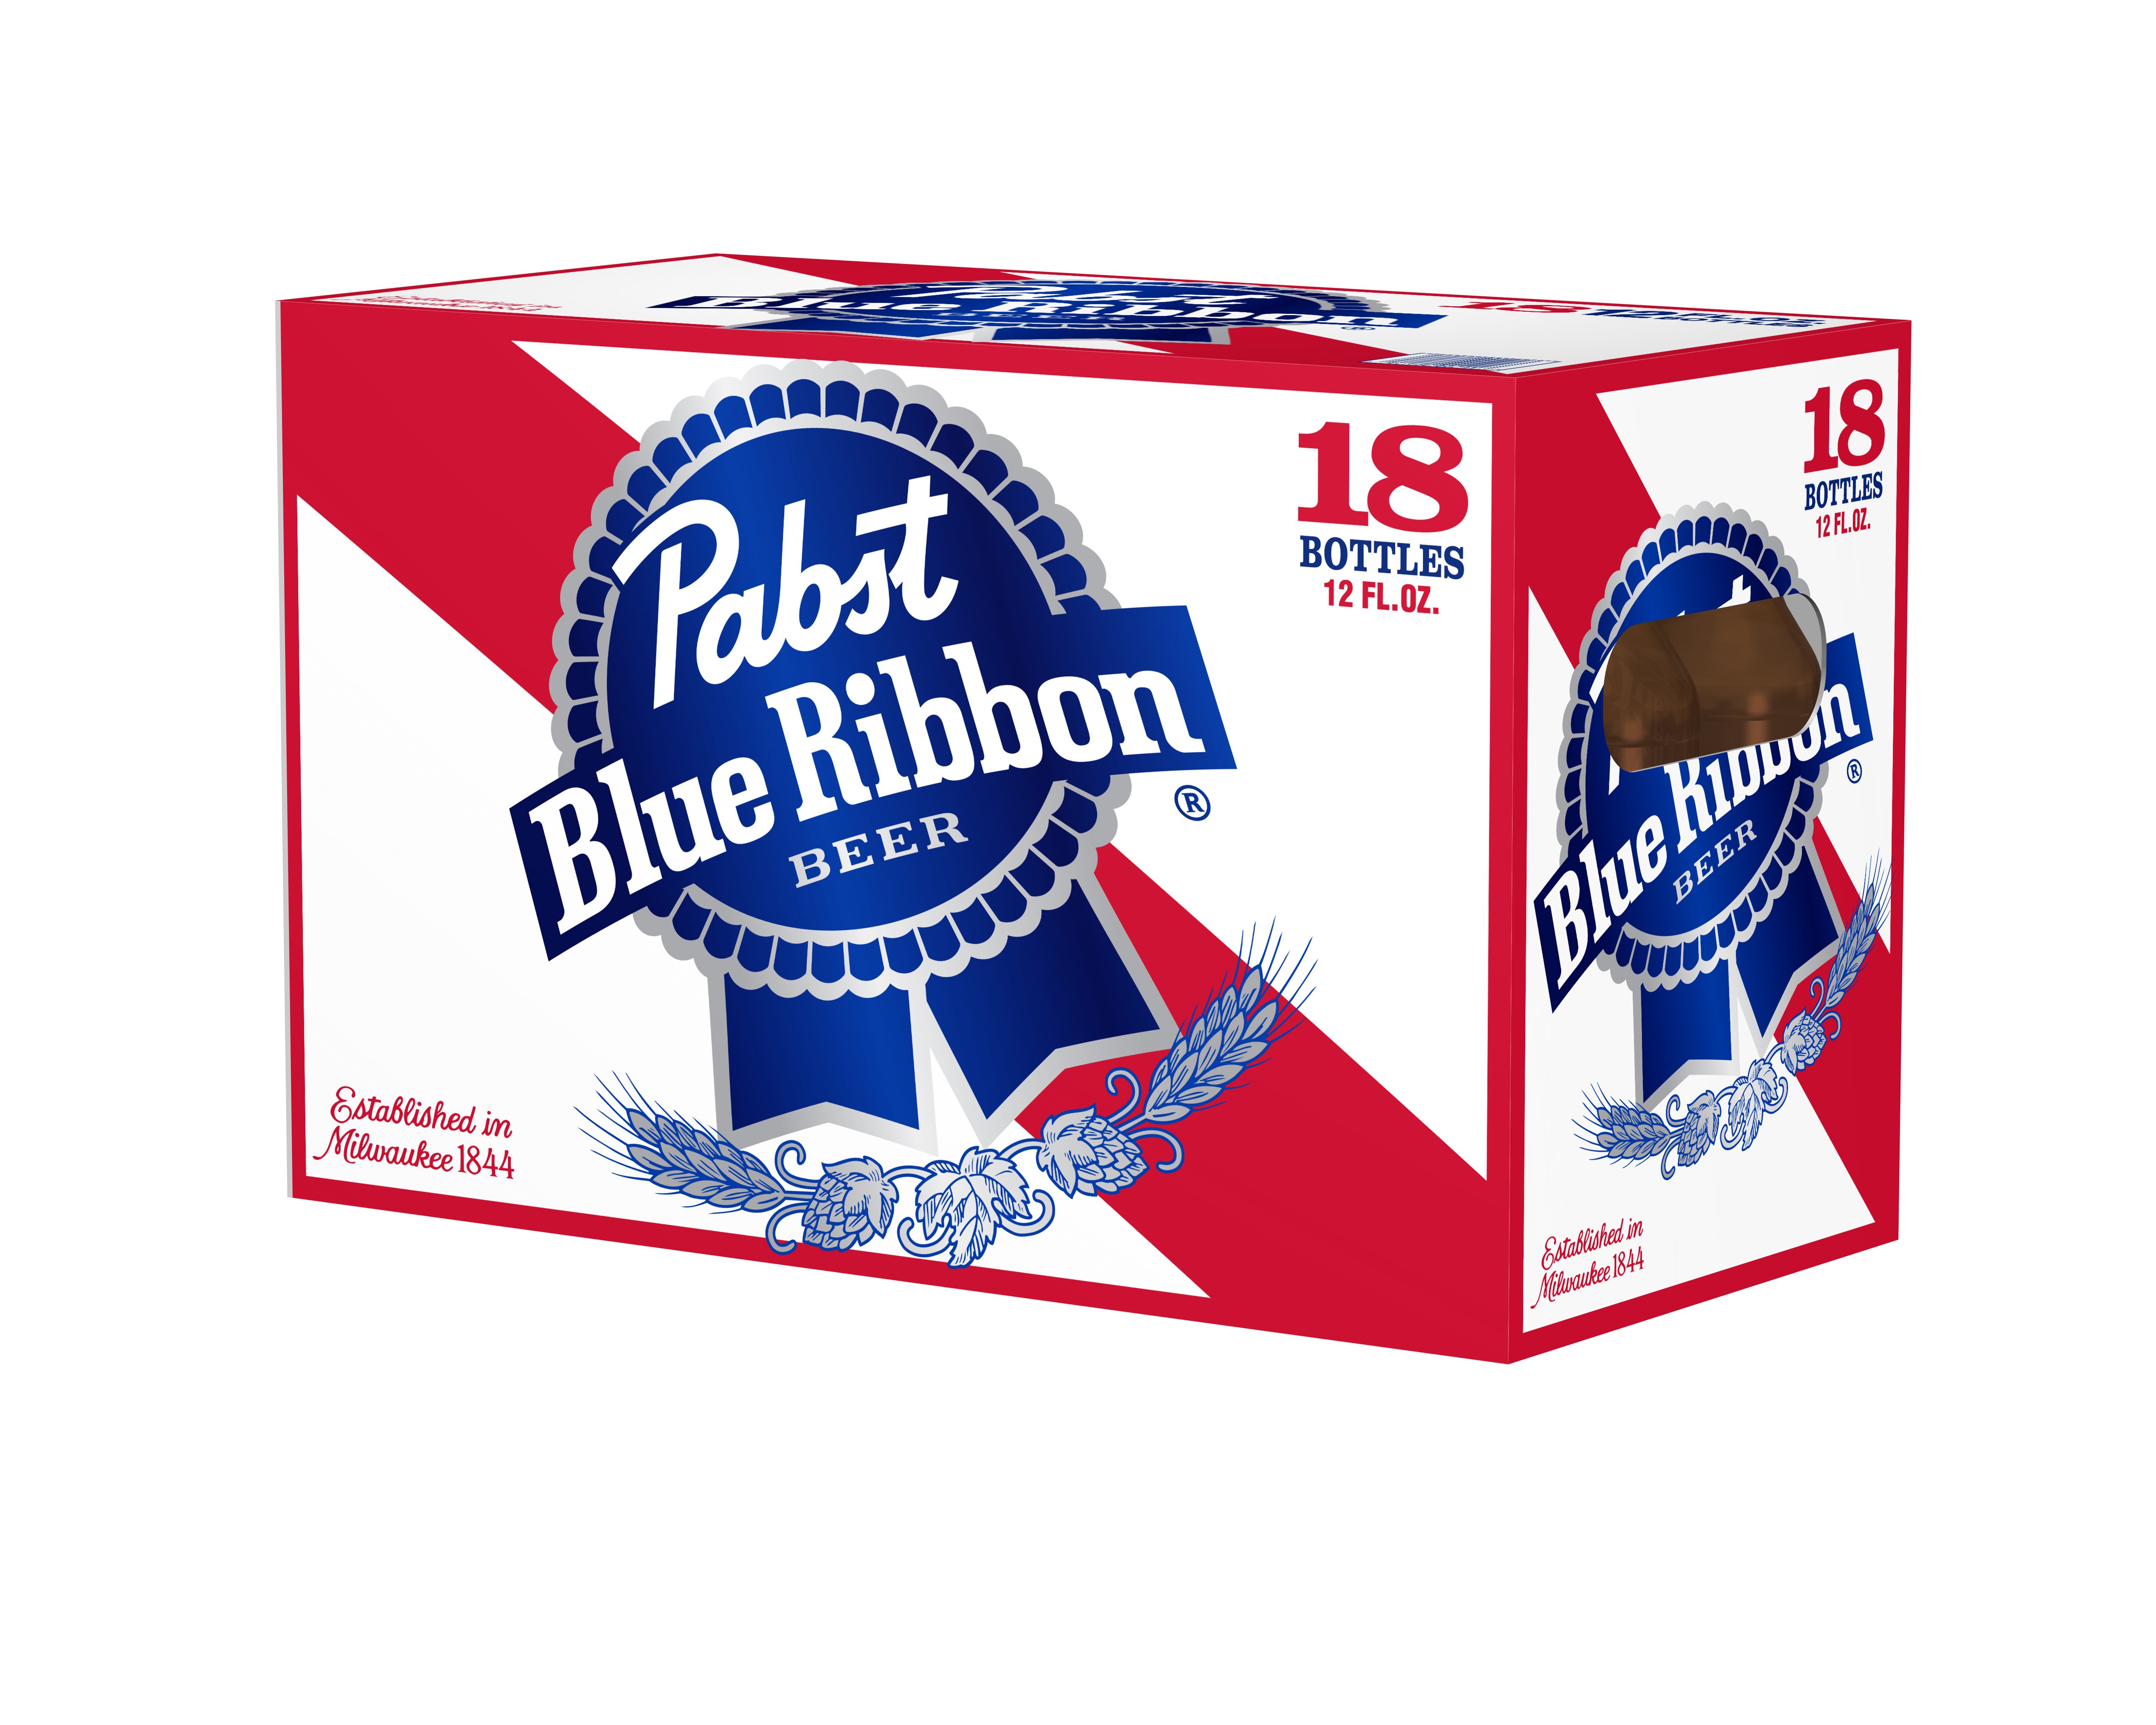 PABST BLUE RIBBON BEER alcohol 3 wallpaper 5120x4096 400177